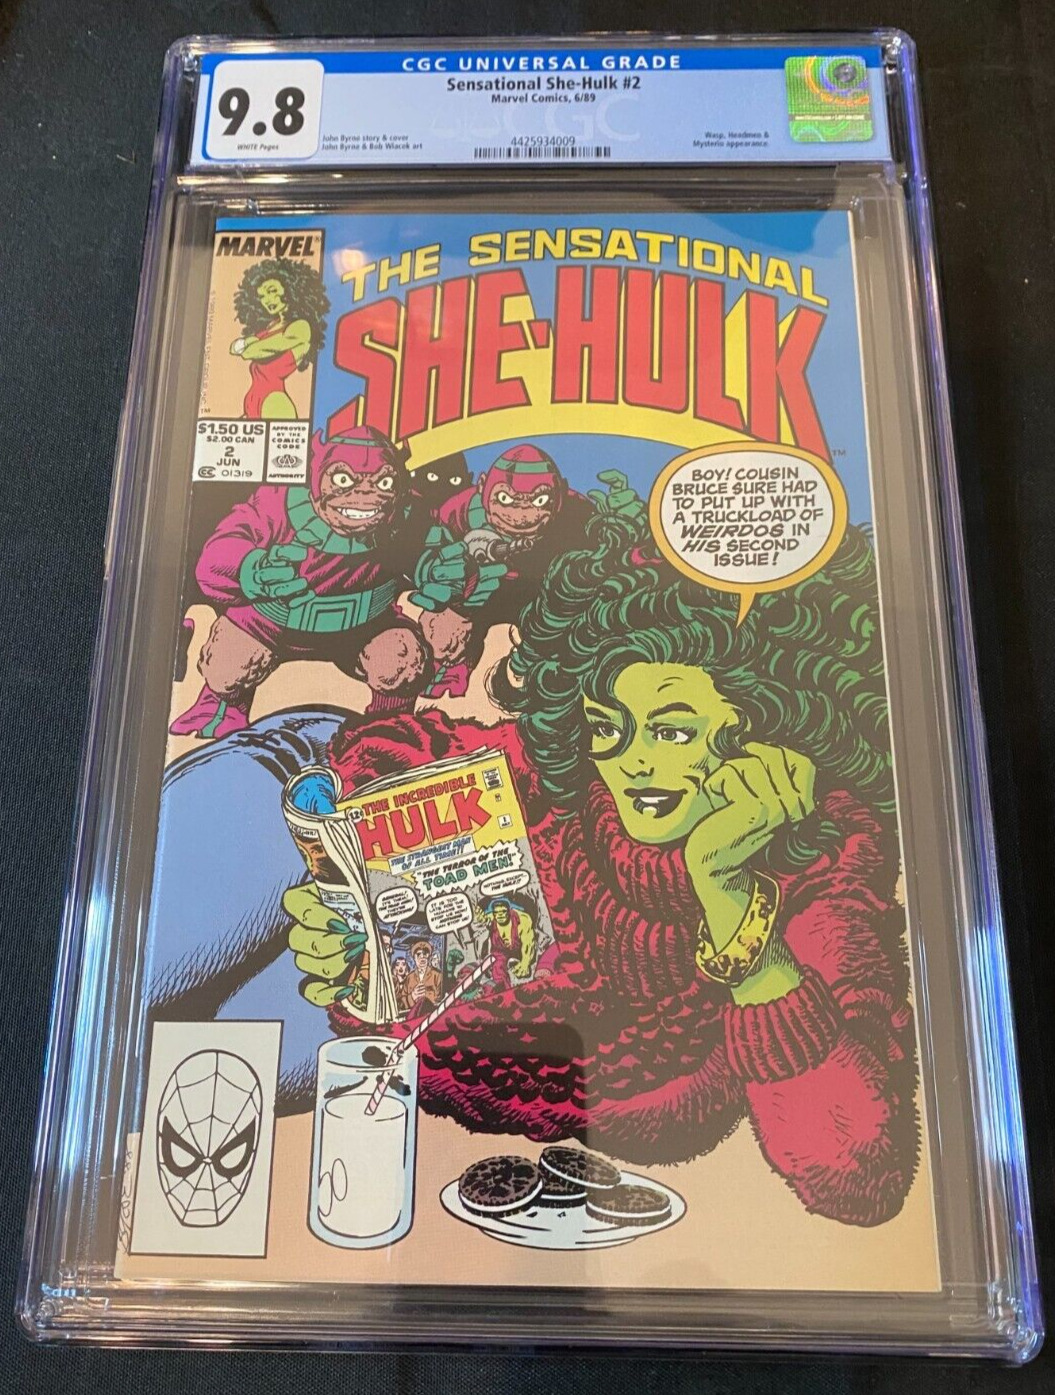 The Sensational She-Hulk #2 1989 CGC 9.8 Newly Graded